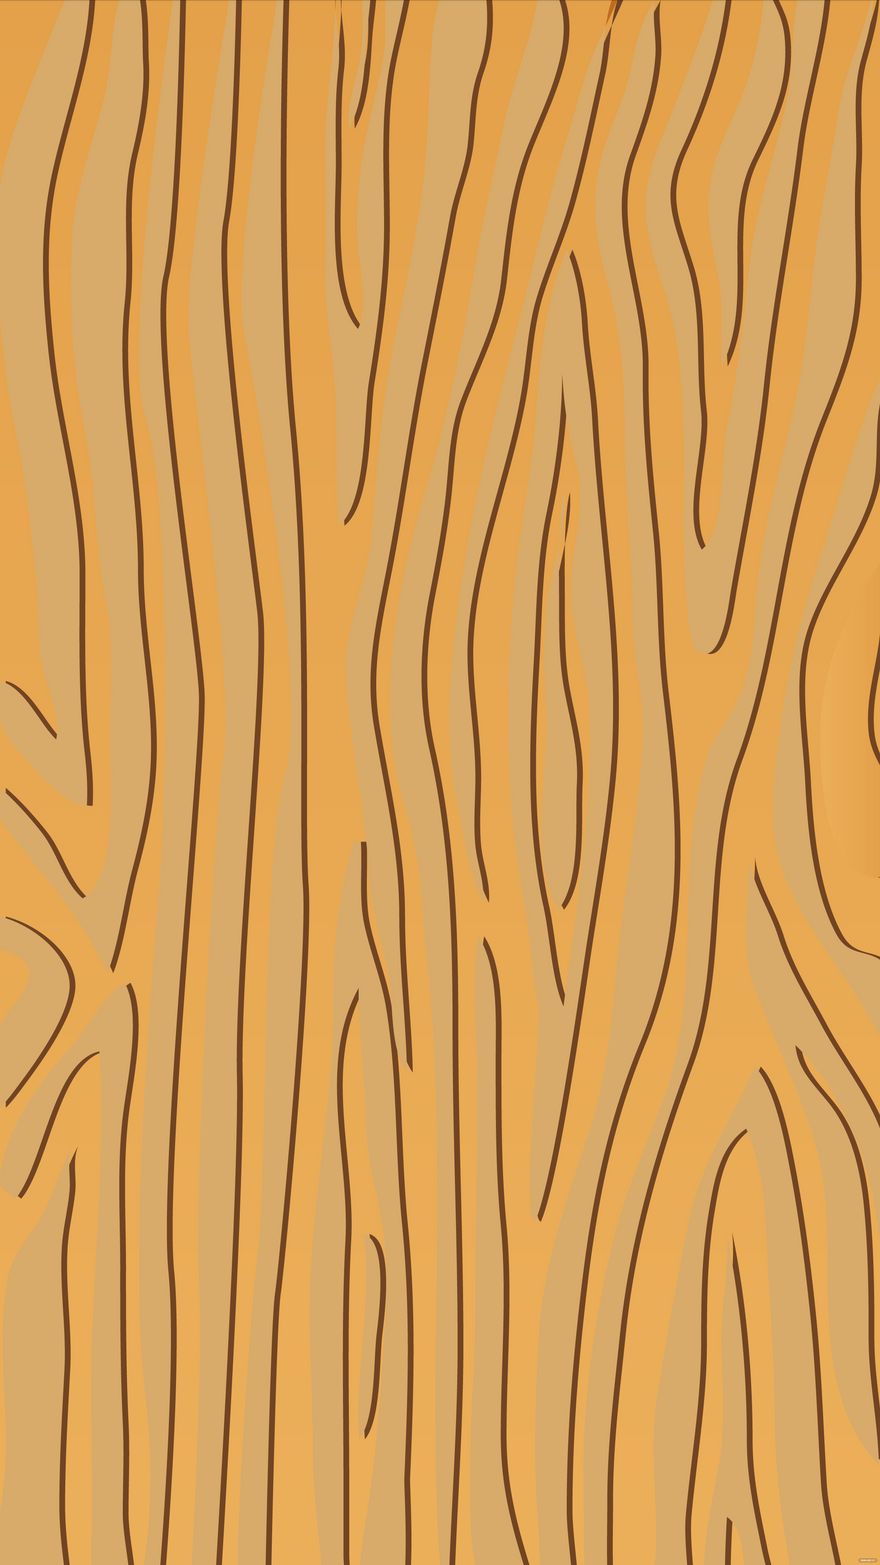 Free Wood Iphone Background in Illustrator, EPS, SVG, JPG, PNG